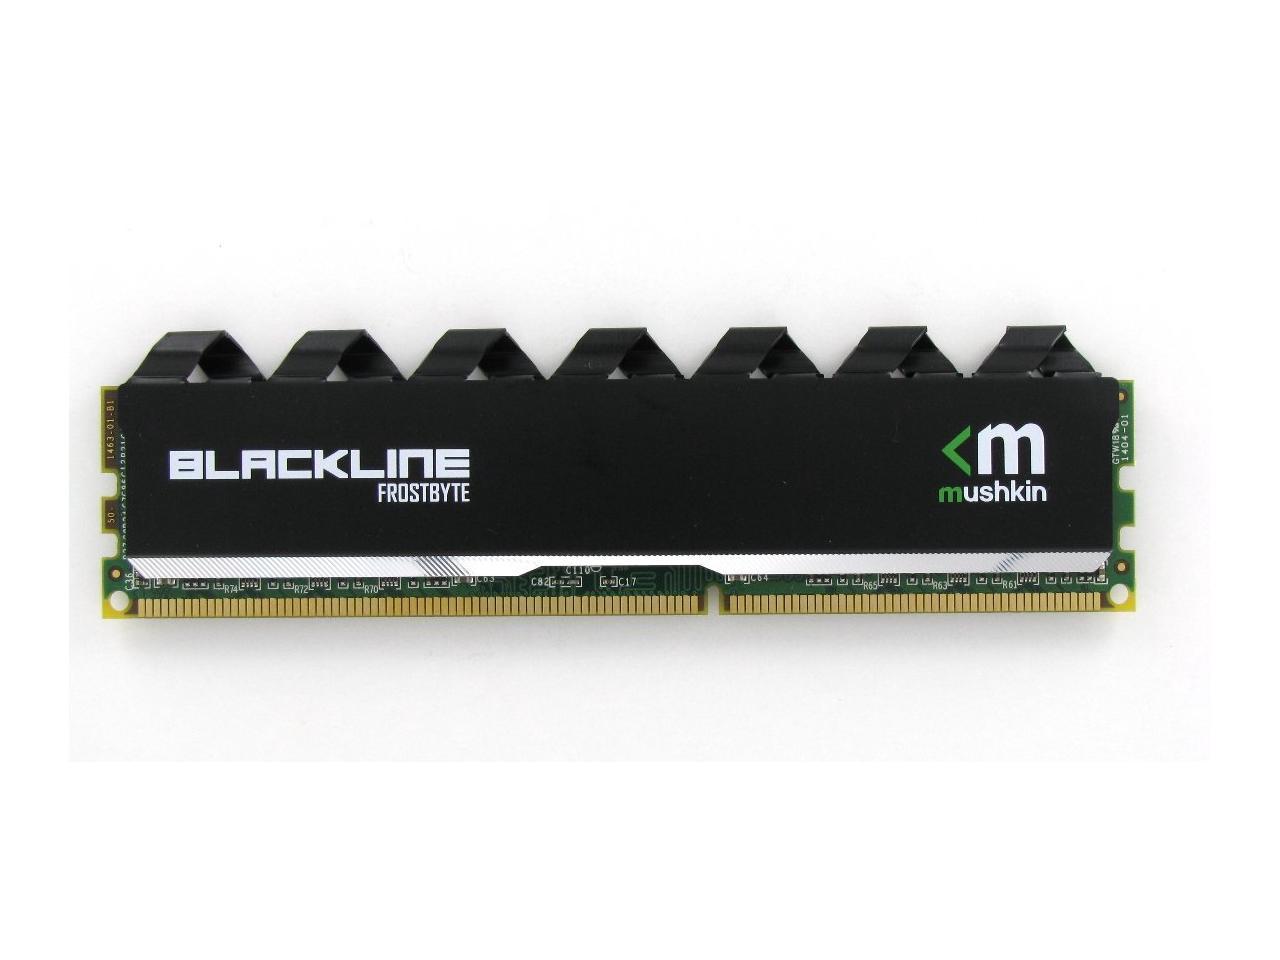 Mushkin Blackline 16GB (2X8GB) DDR4 UDIMM PC4-2400 Desktop Memory Model BA4U240FFFF16G